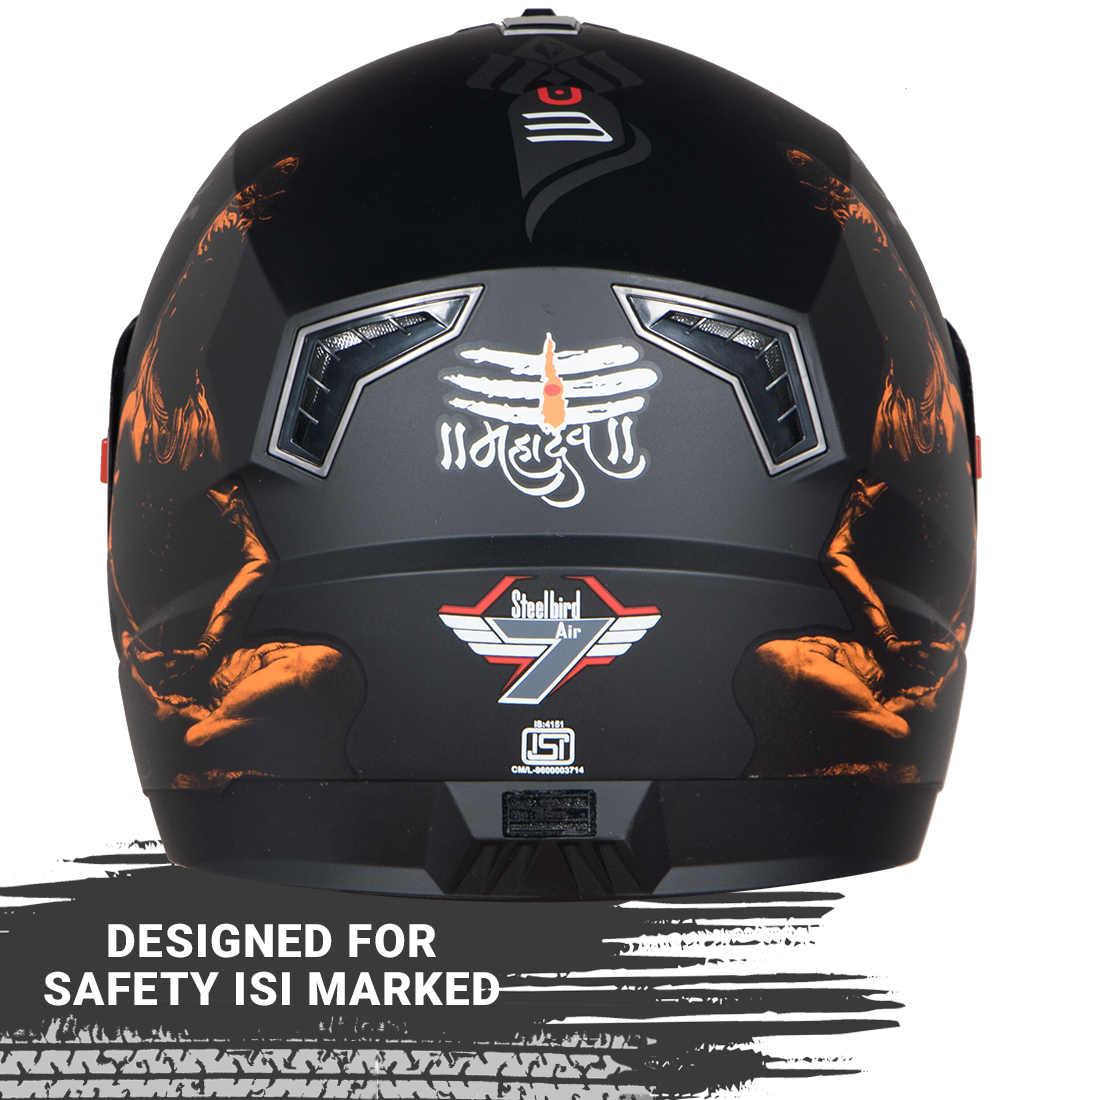 Steelbird SBA-1 Mahadev Full Face ISI Certified Graphic Helmet (Matt Black Orange With Clear Visor)